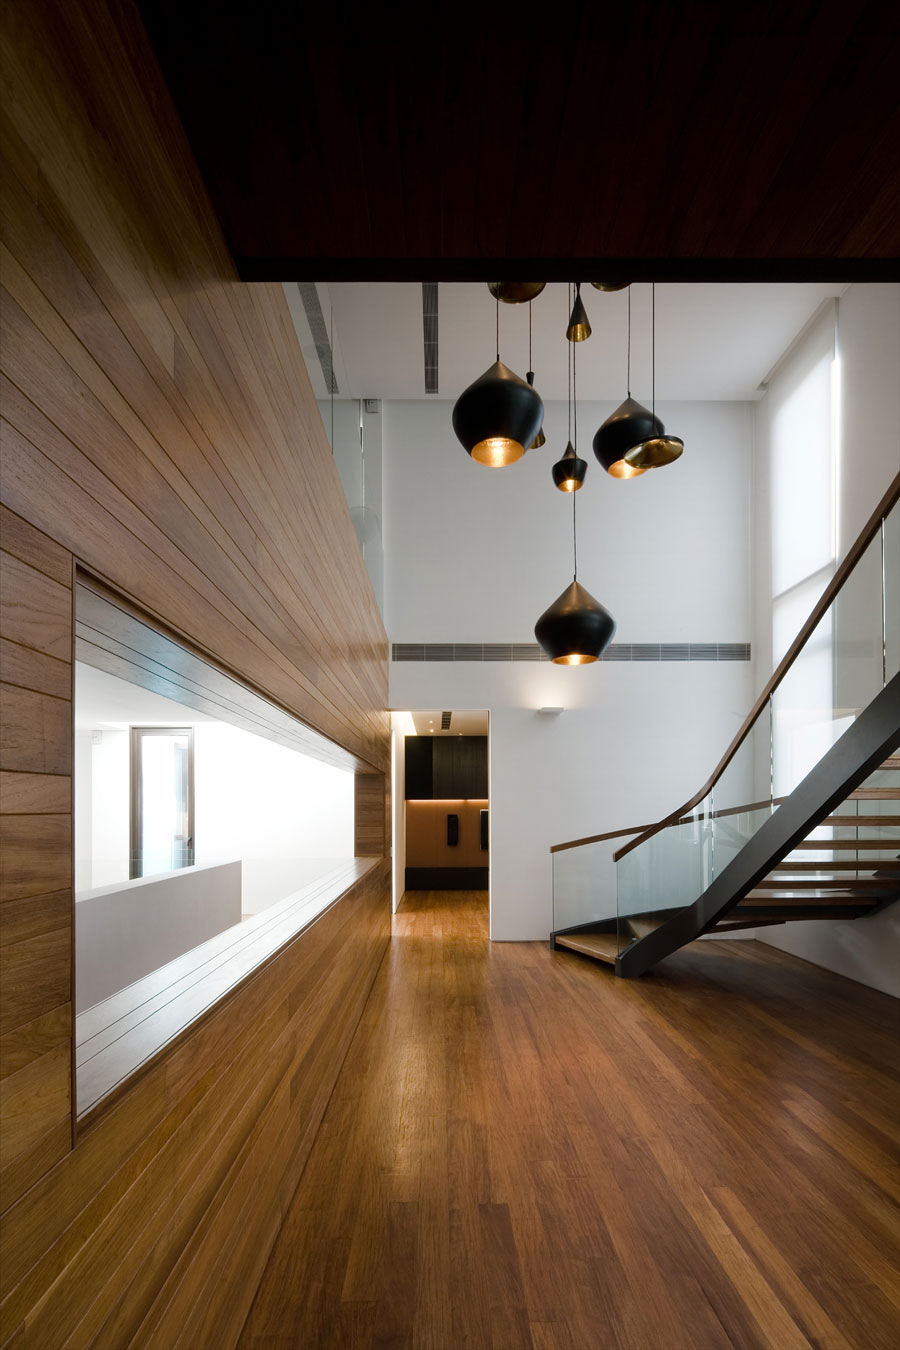 Metallic Exterior Meets Modern Interiors At Singapore's Green House